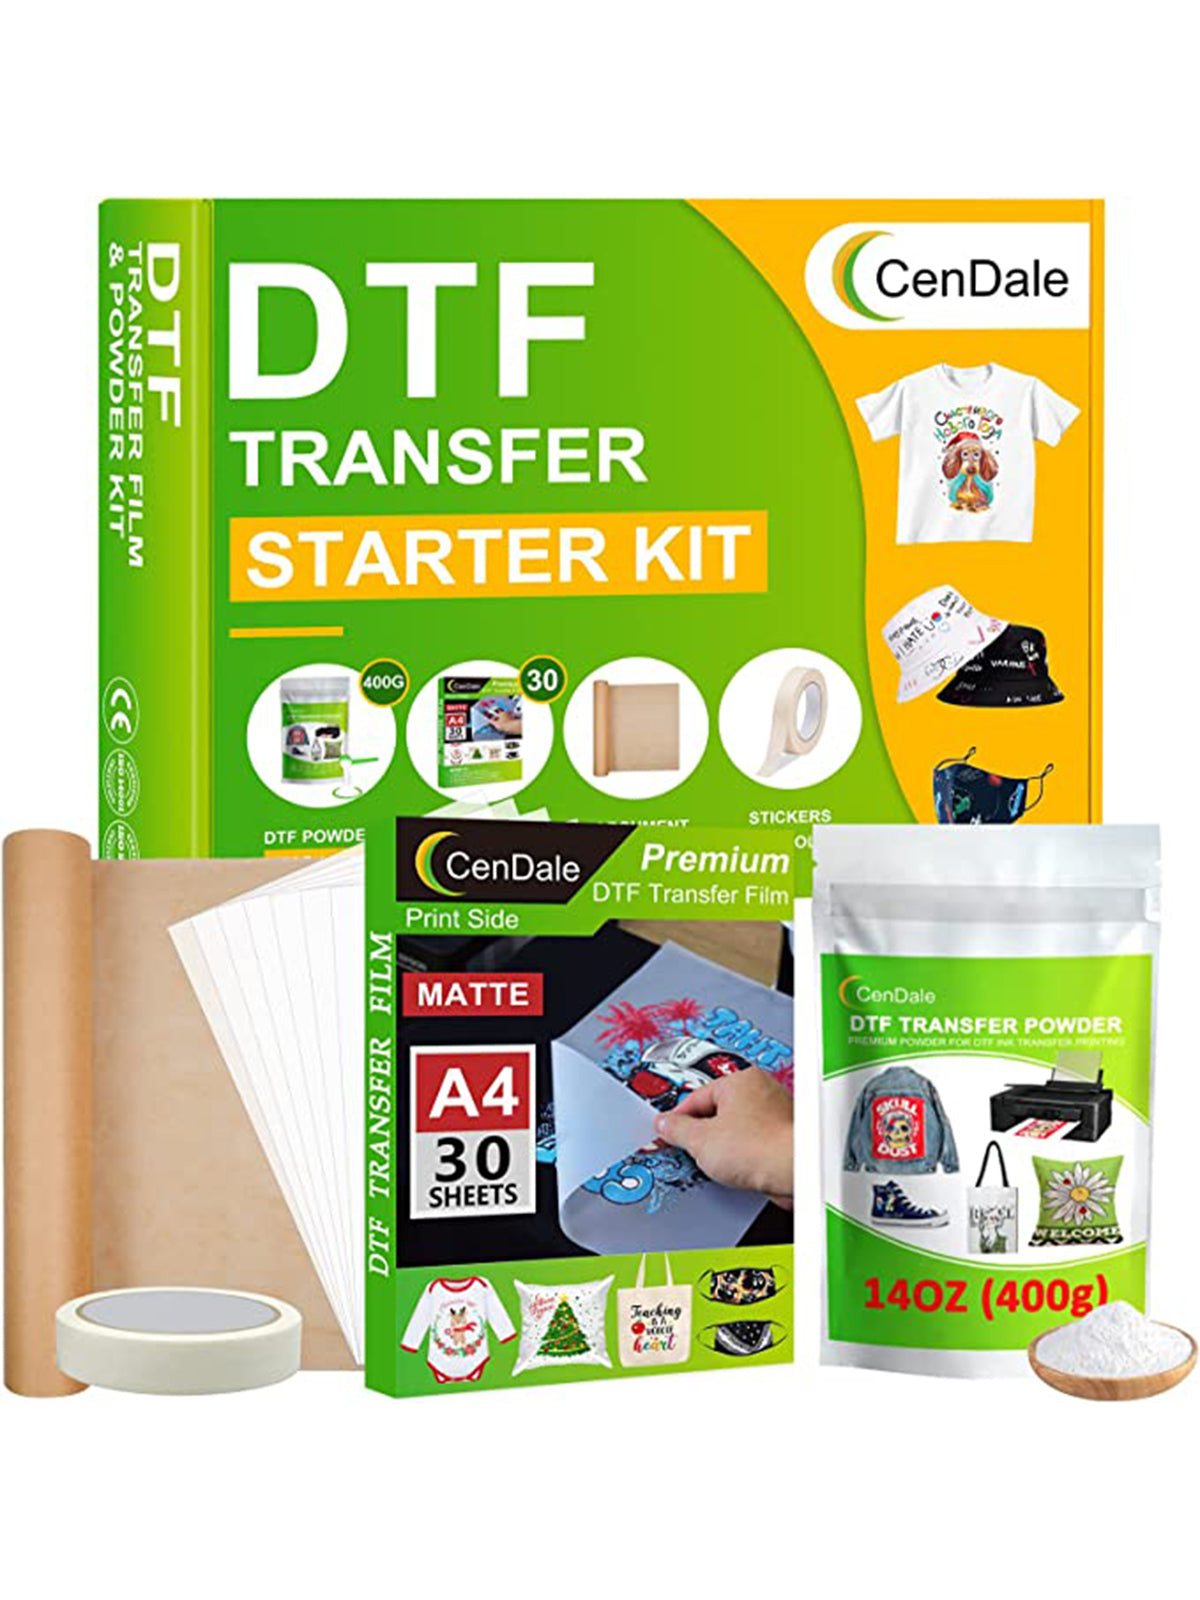 CenDale DTF Transfer Film and Powder Starter Kit - A4